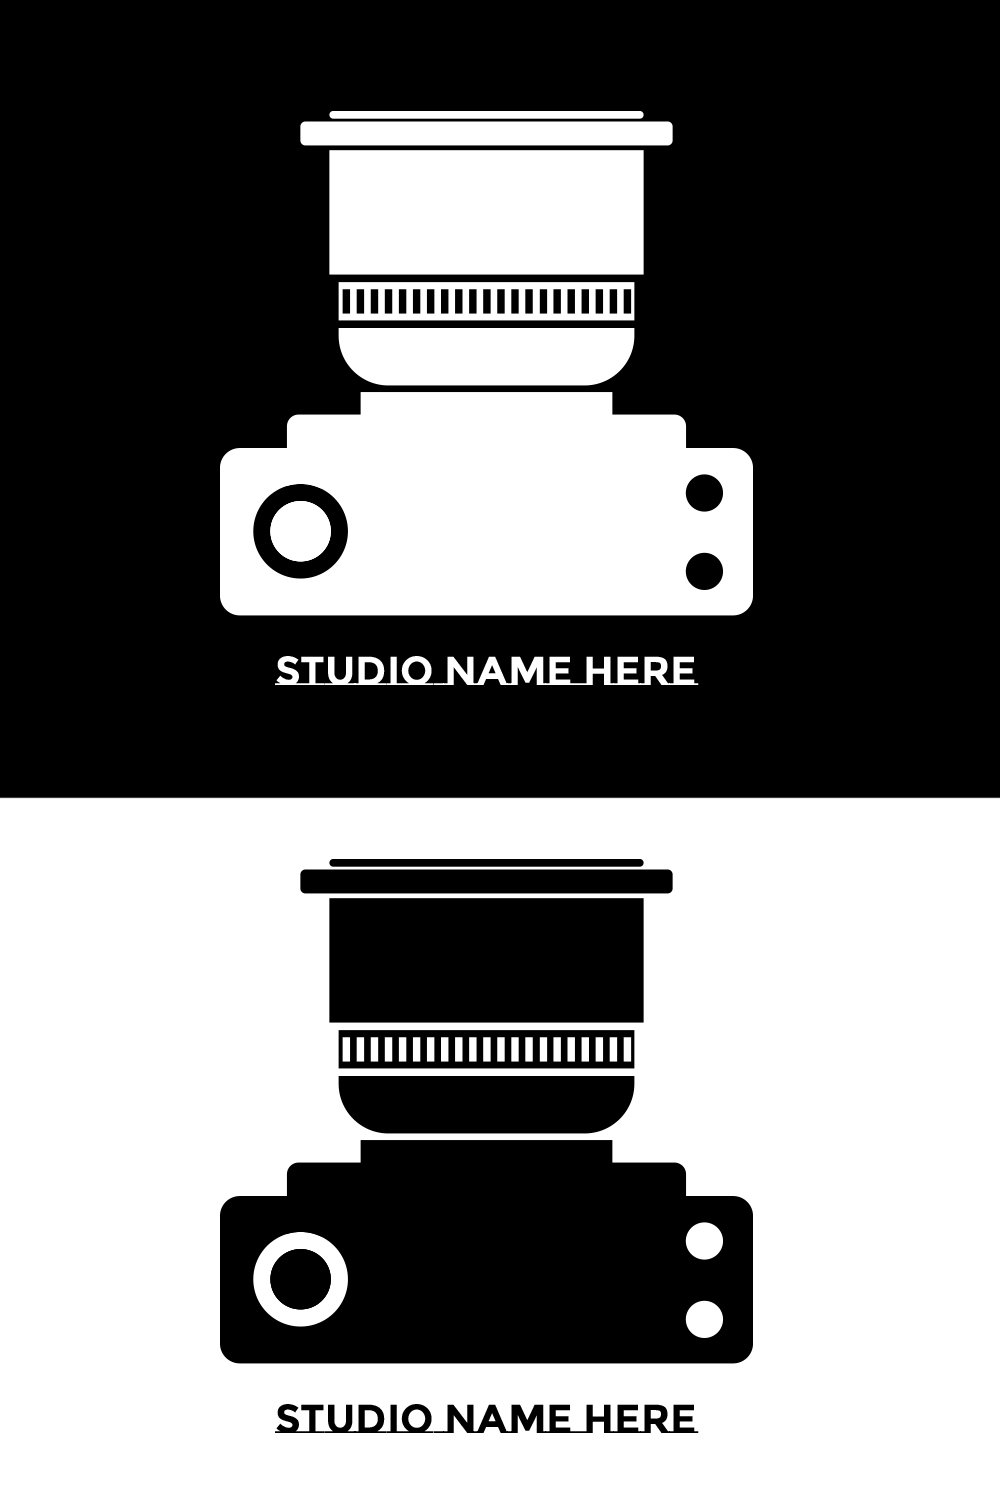 Studio Logo Design Pinterest image.